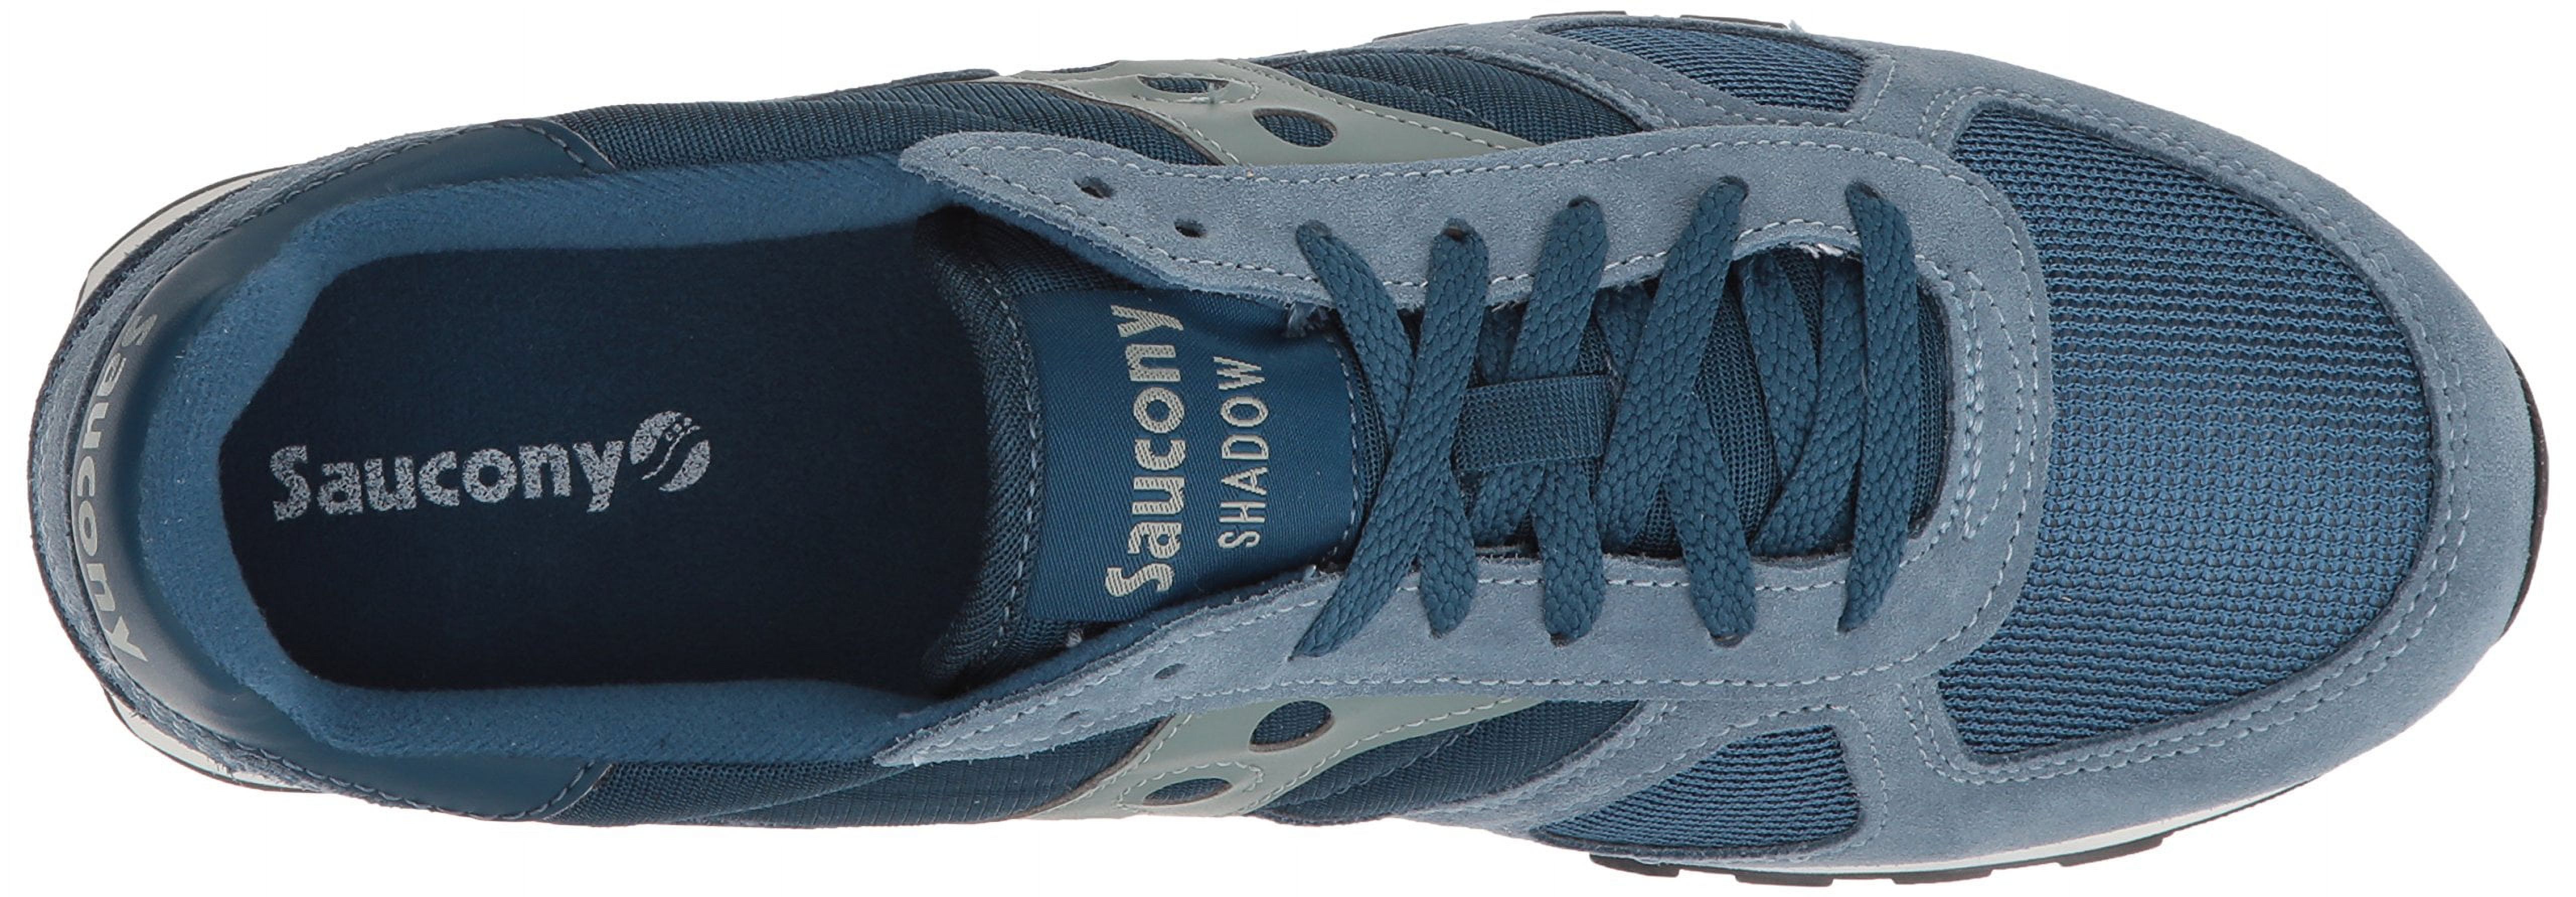 Saucony Shadow Original Blue/Blue/White Men's Running Shoes S2108-682 ...